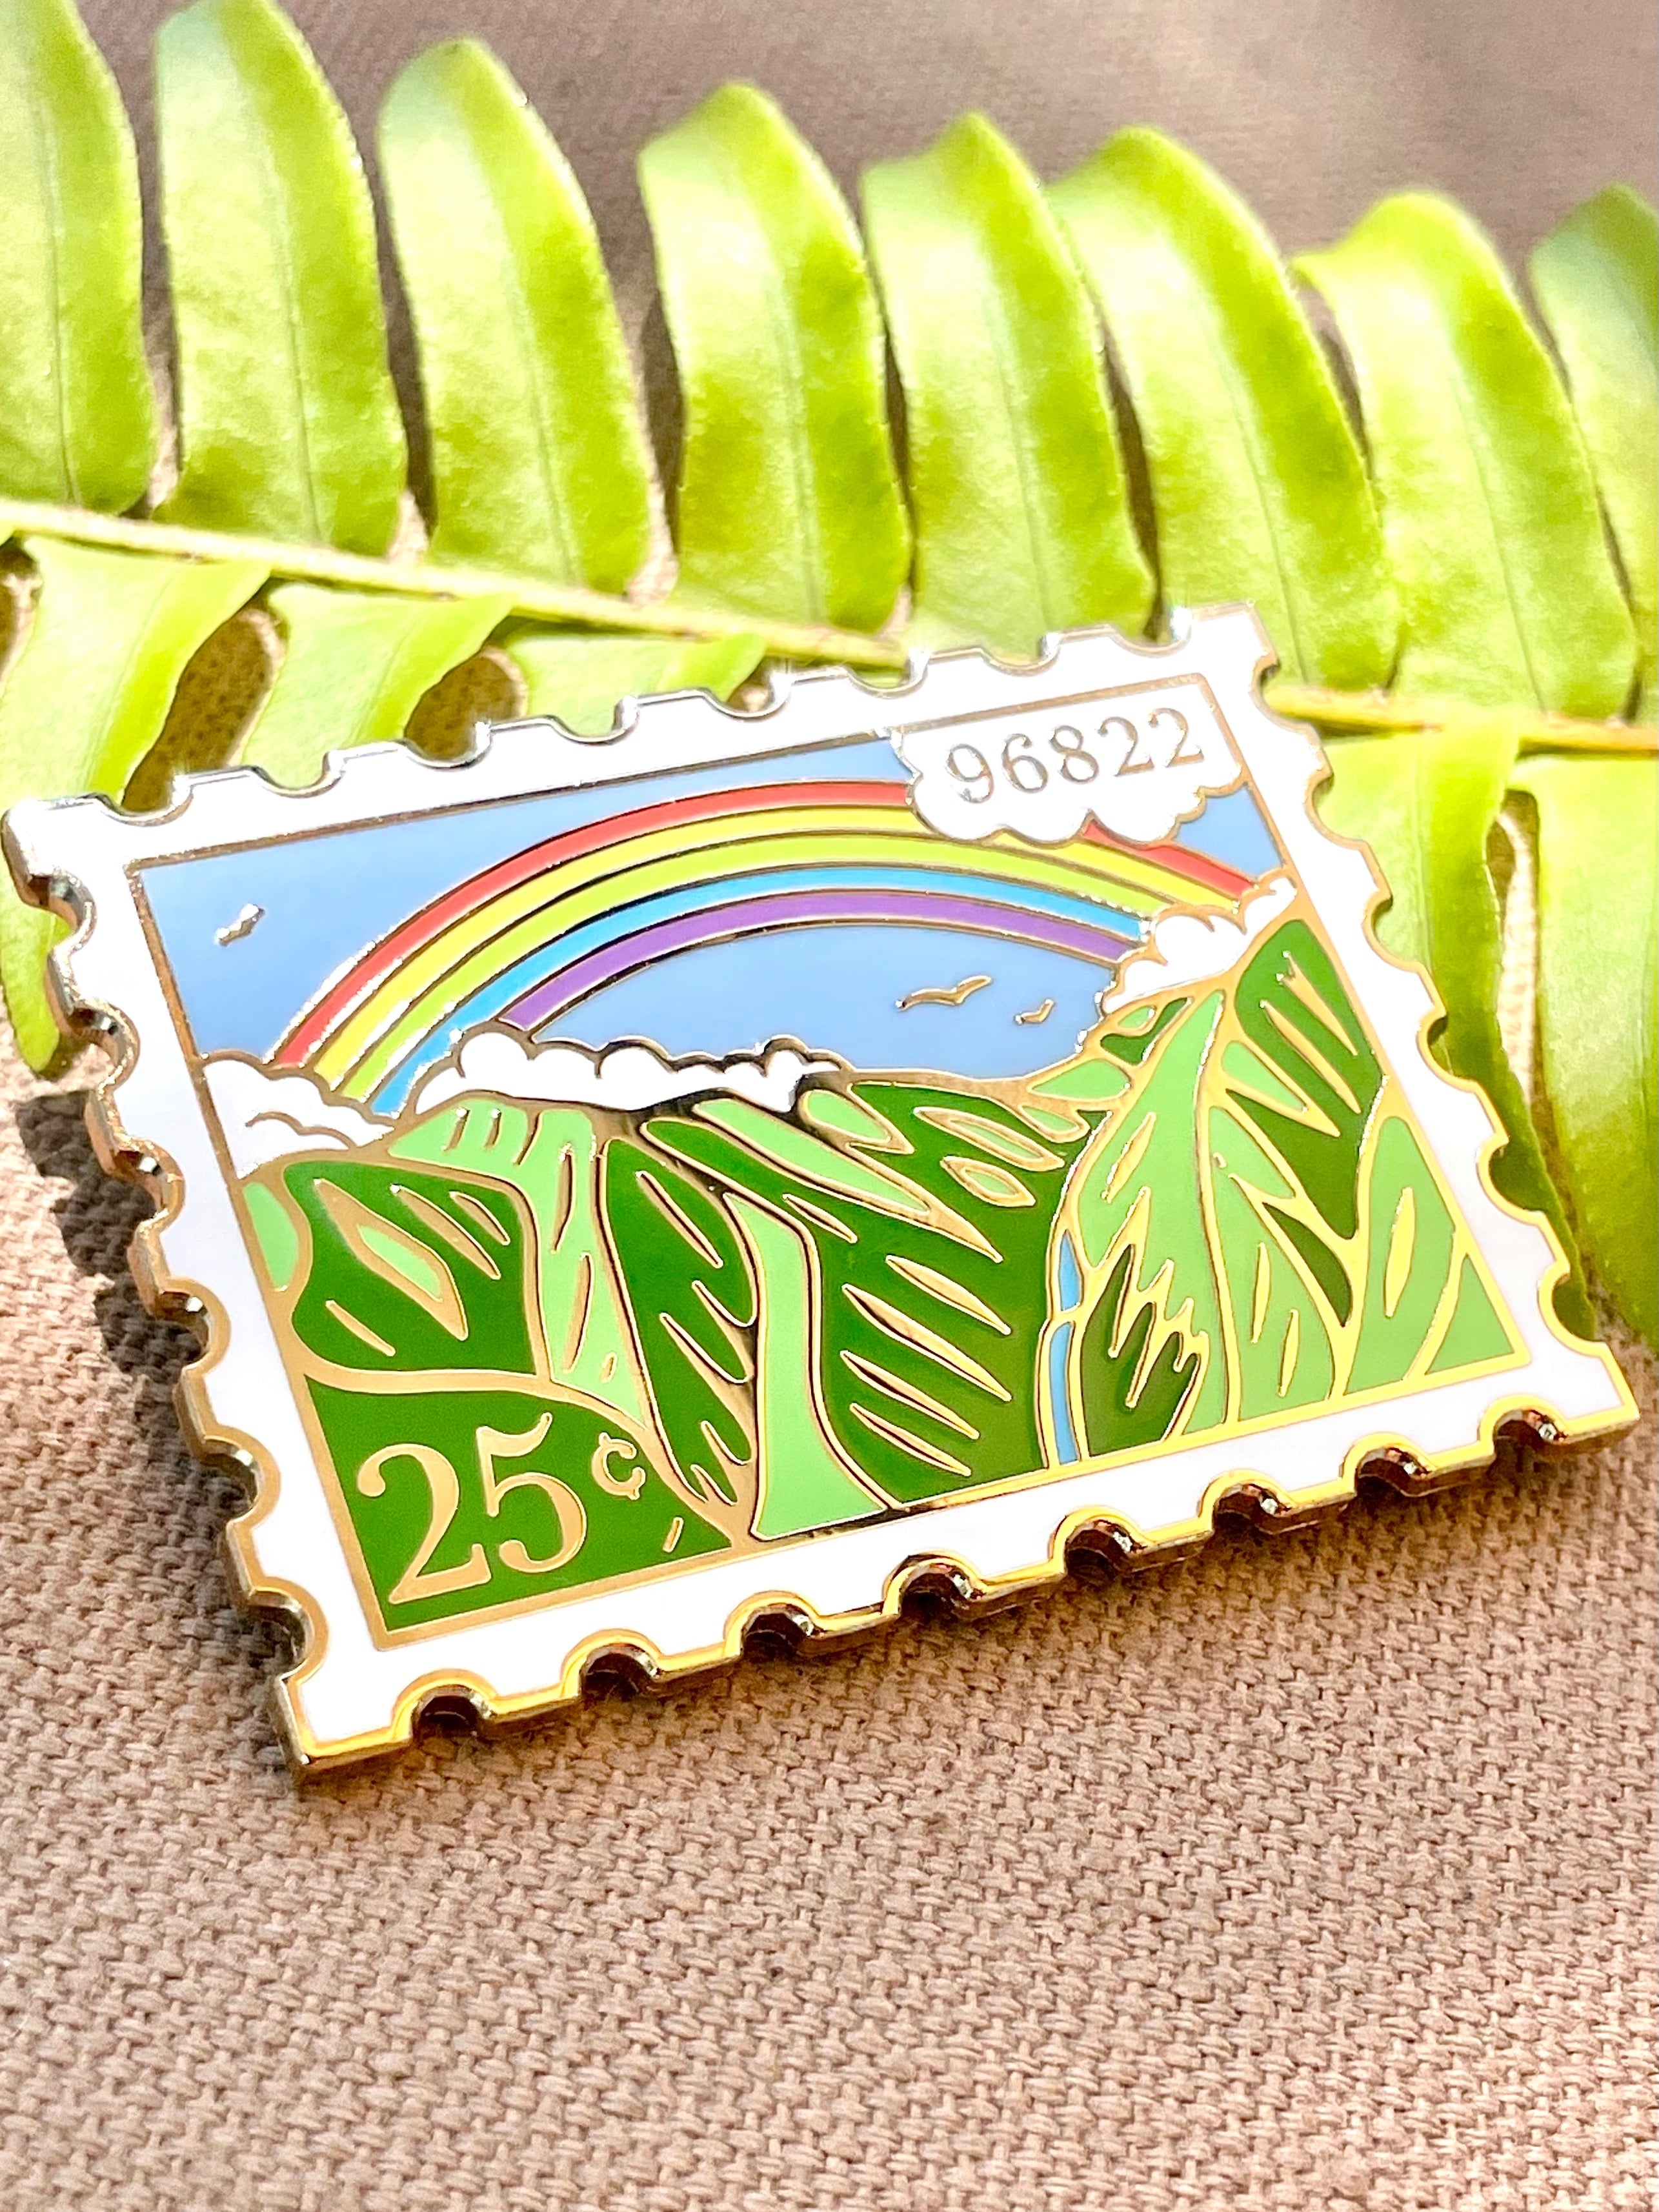 SECONDS ✷ Mānoa Valley Post Stamp Pin